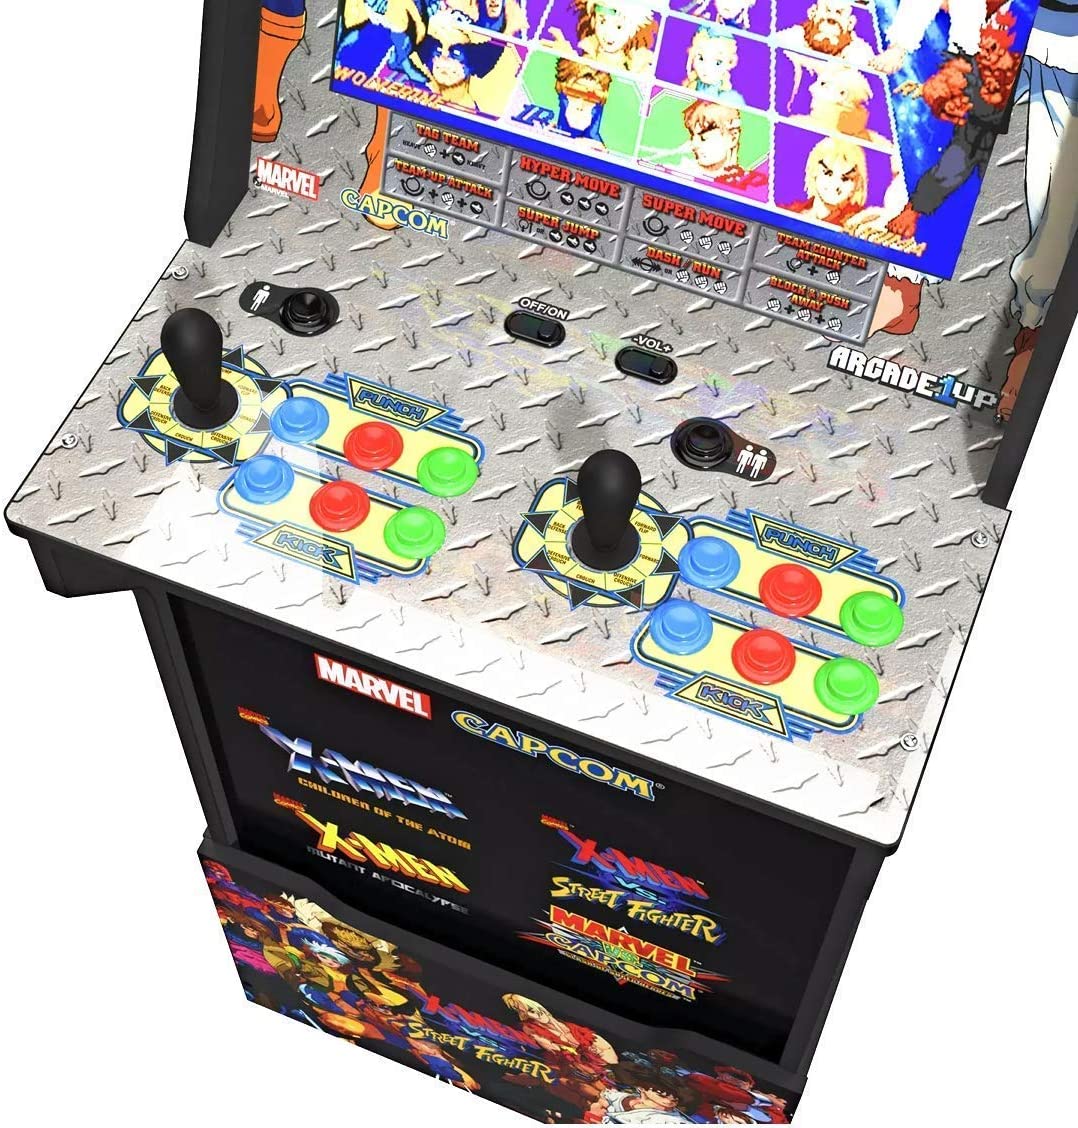 Arcade 1Up, X-Men vs. Street Fighter Arcade Machine - image 3 of 4